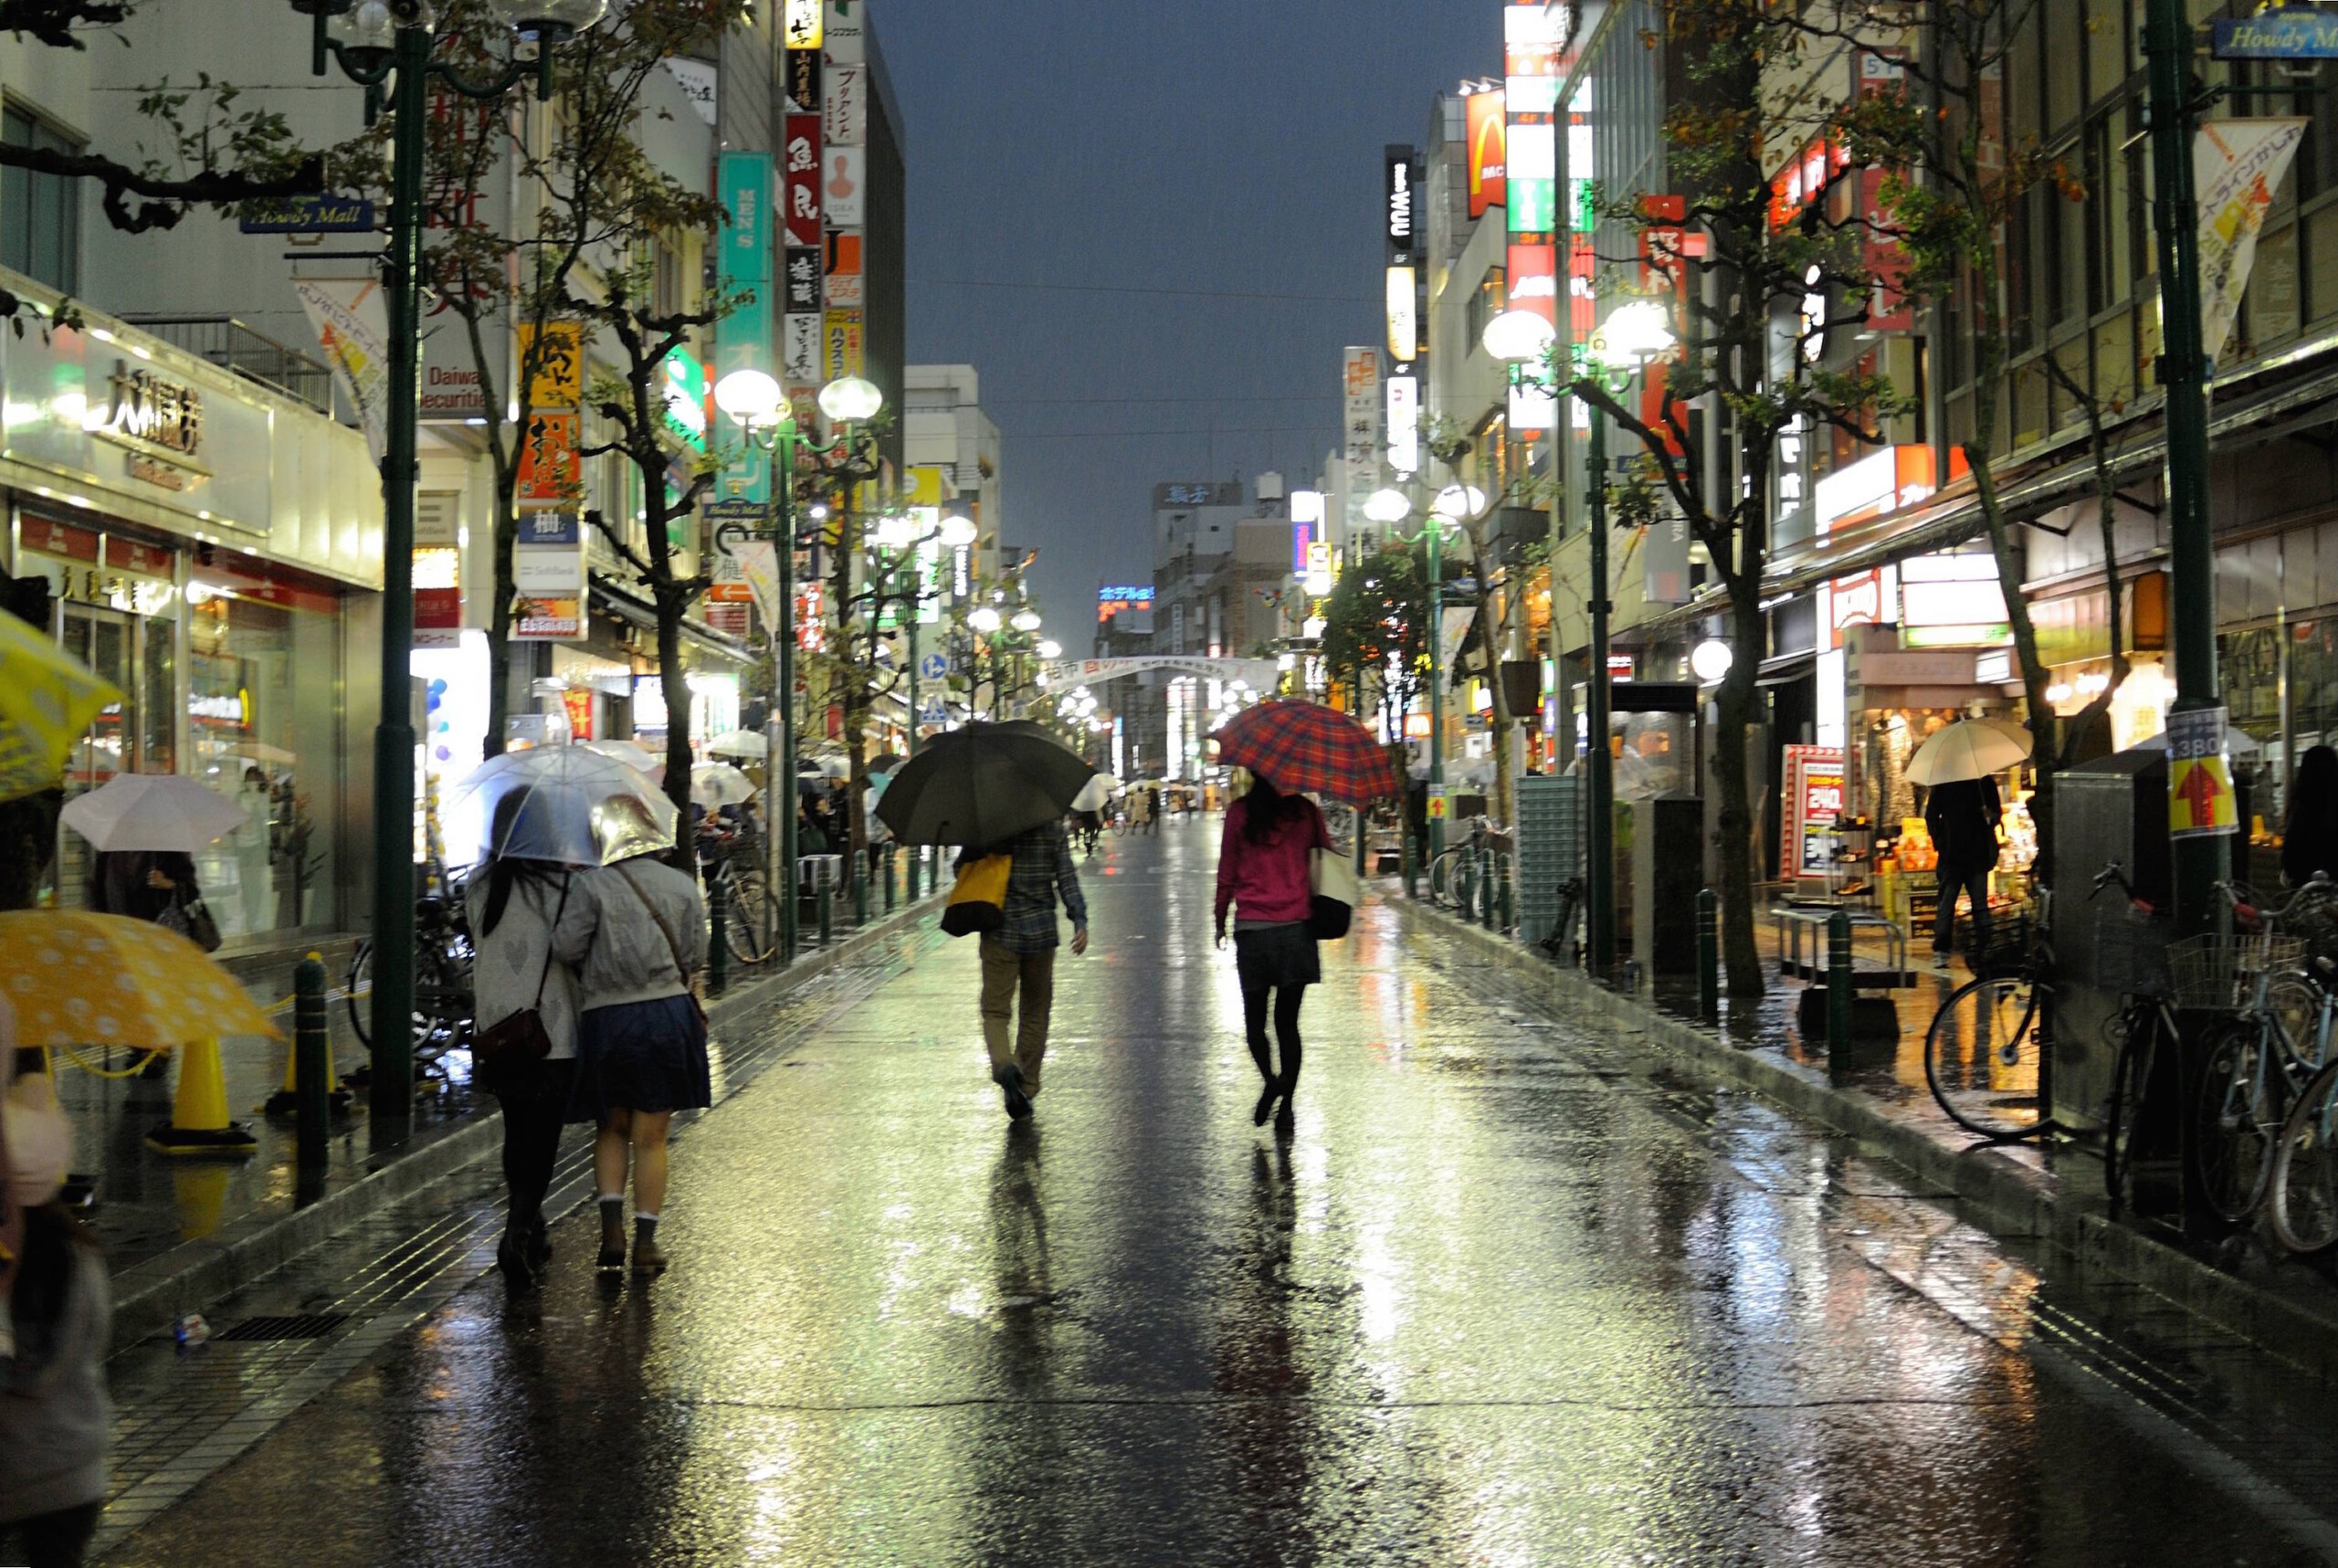 Pedestrians hold umbrellas, their backs to us, walking on a Tokyo street on a rainy night.